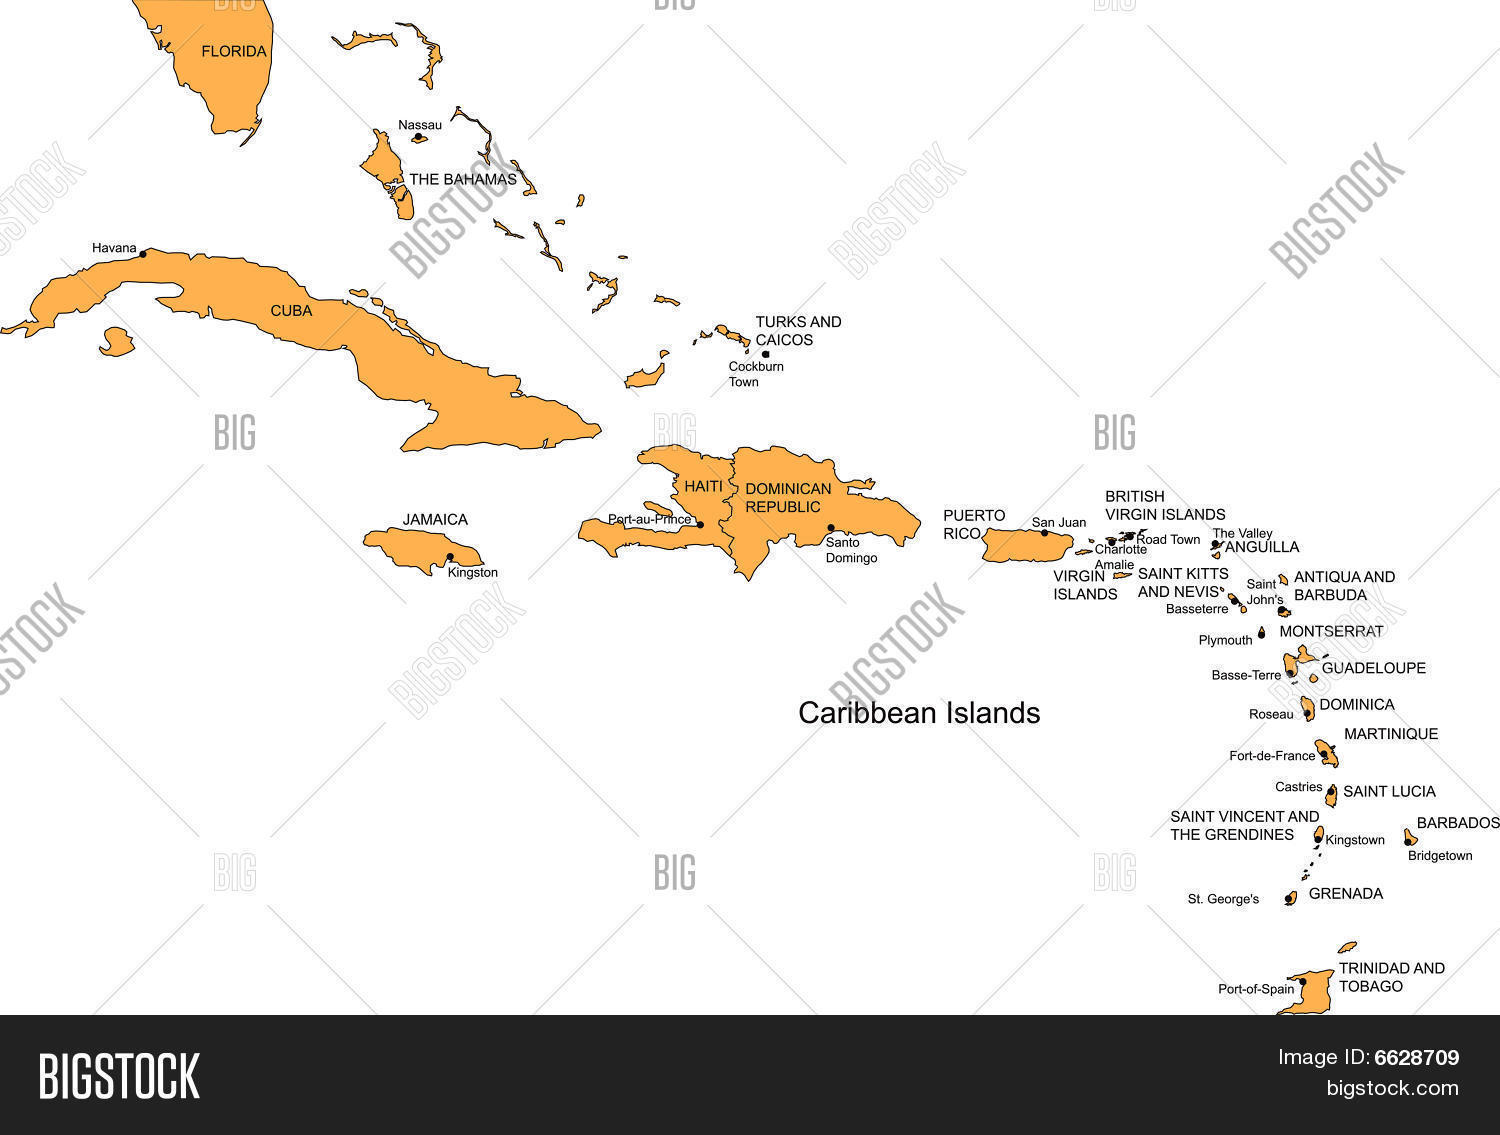 clipart caribbean islands - photo #14